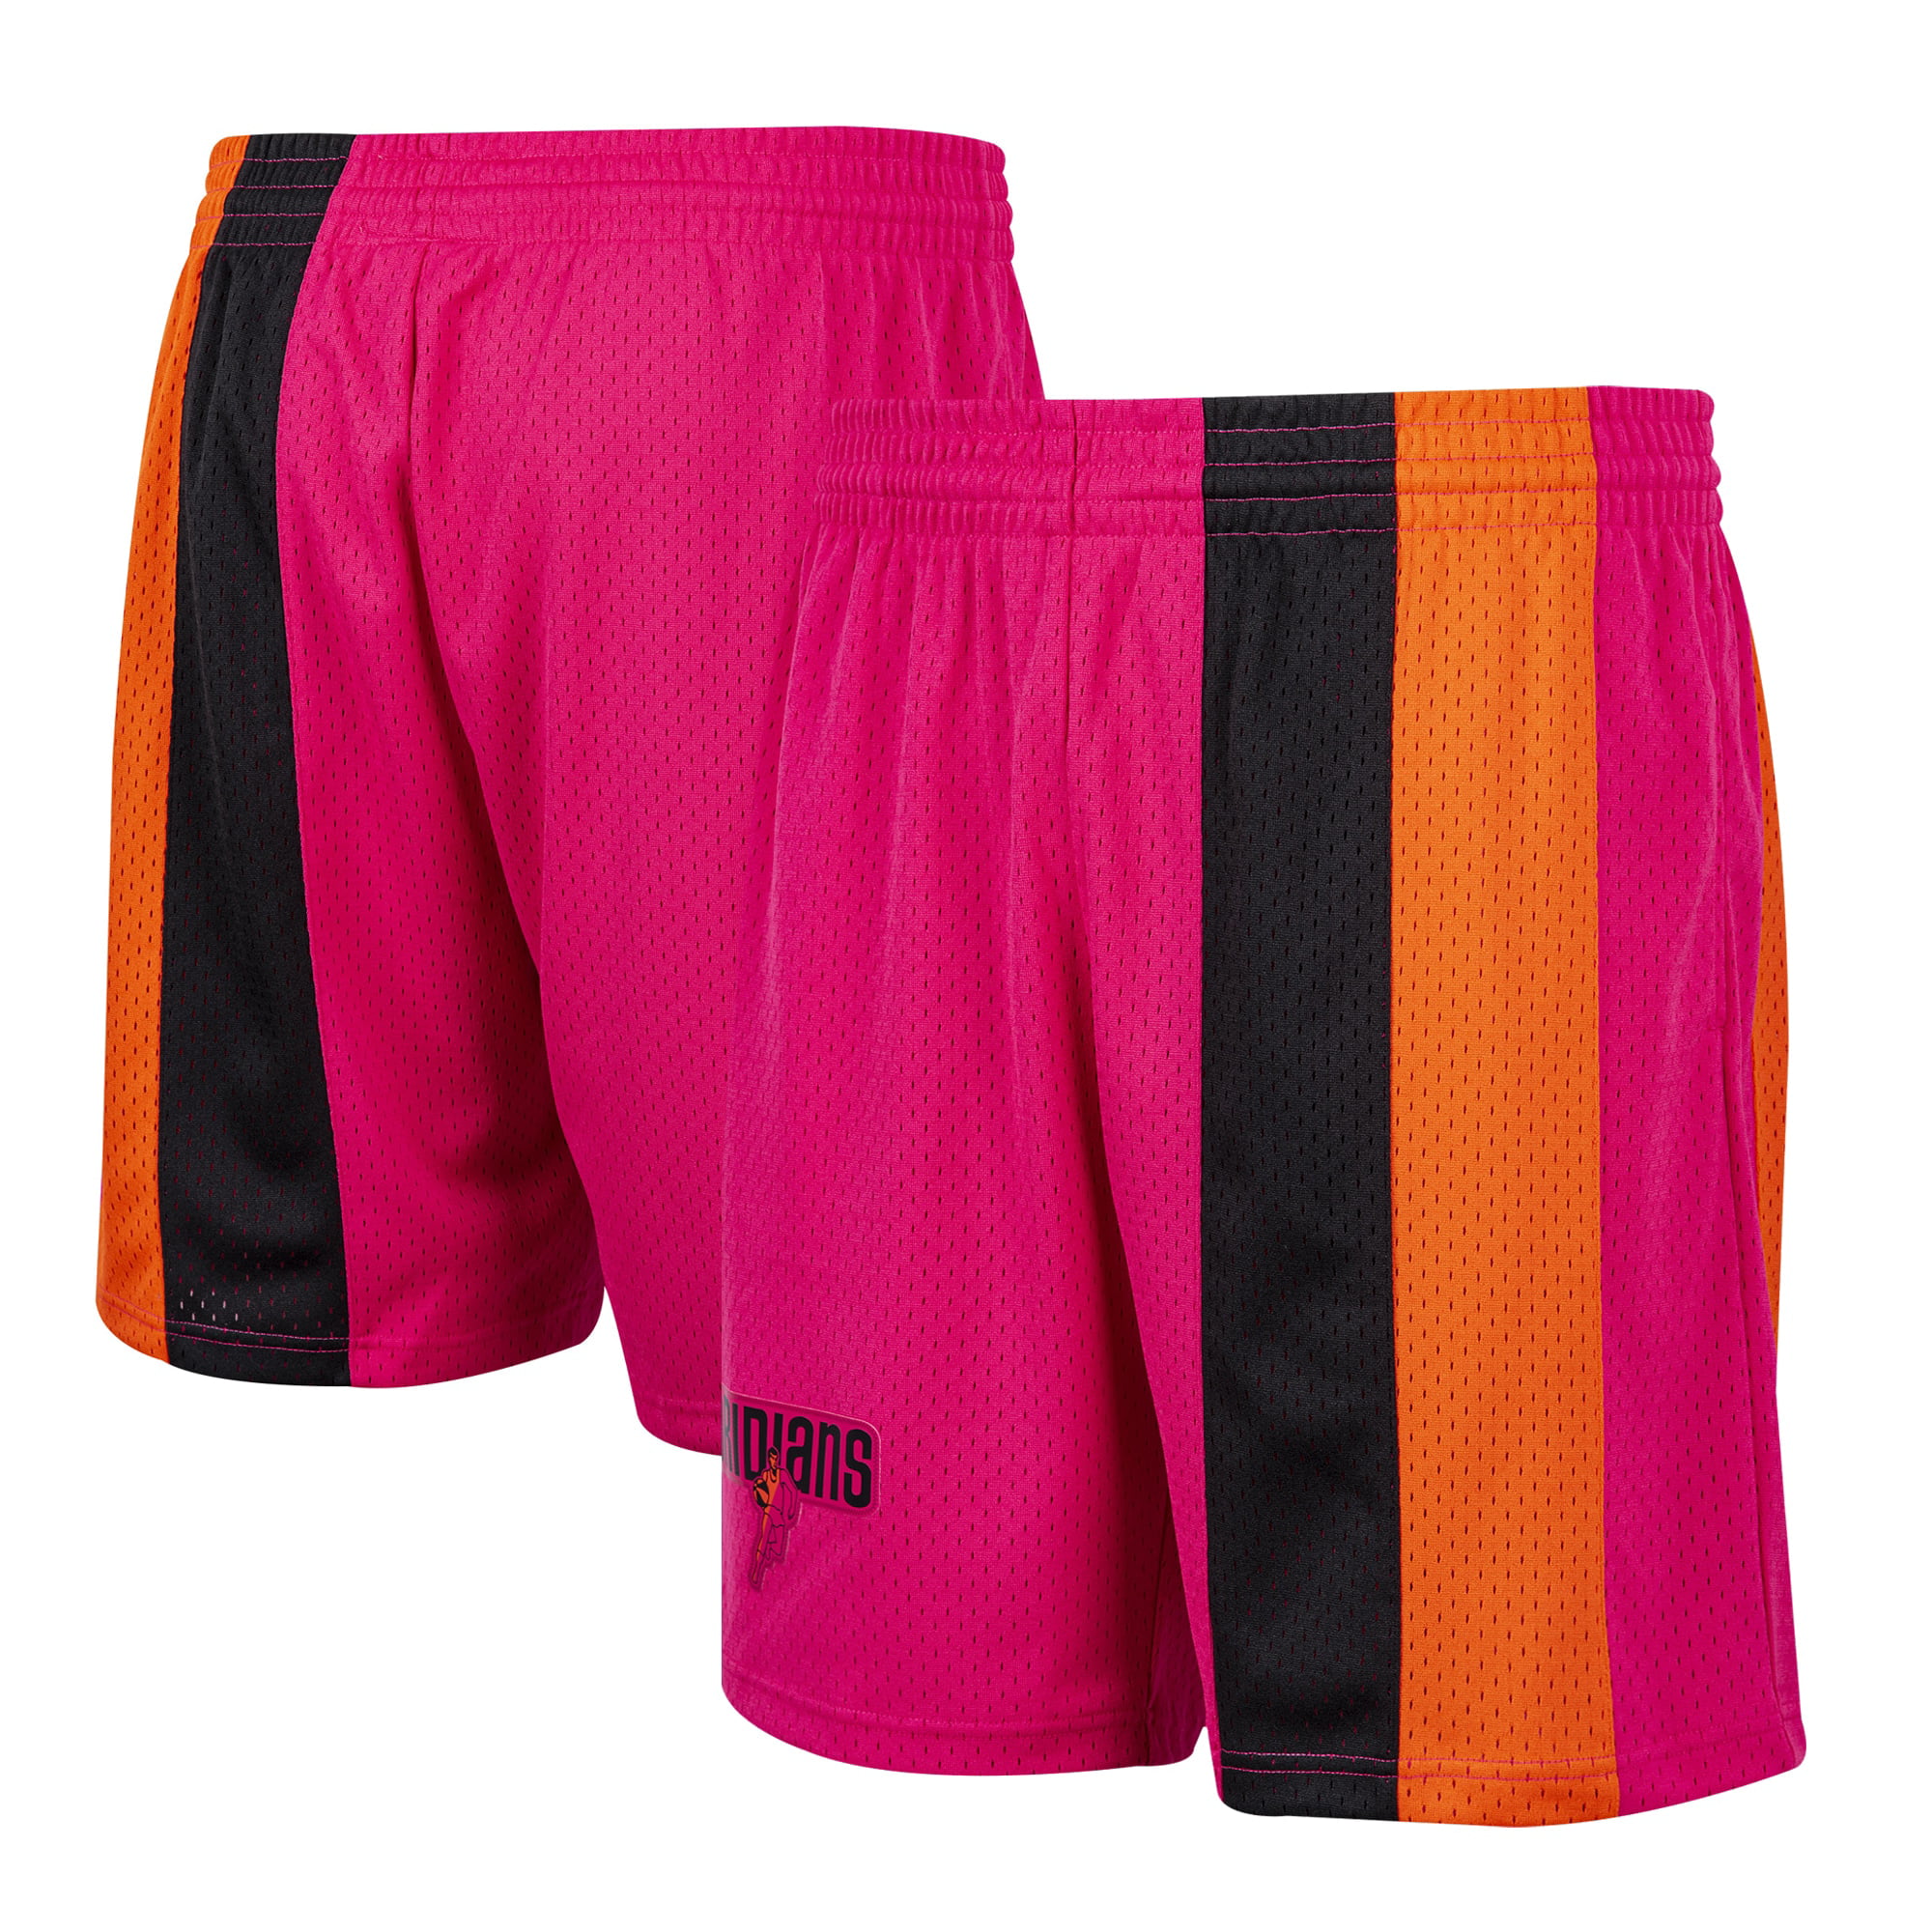 miami heat jersey pink shorts